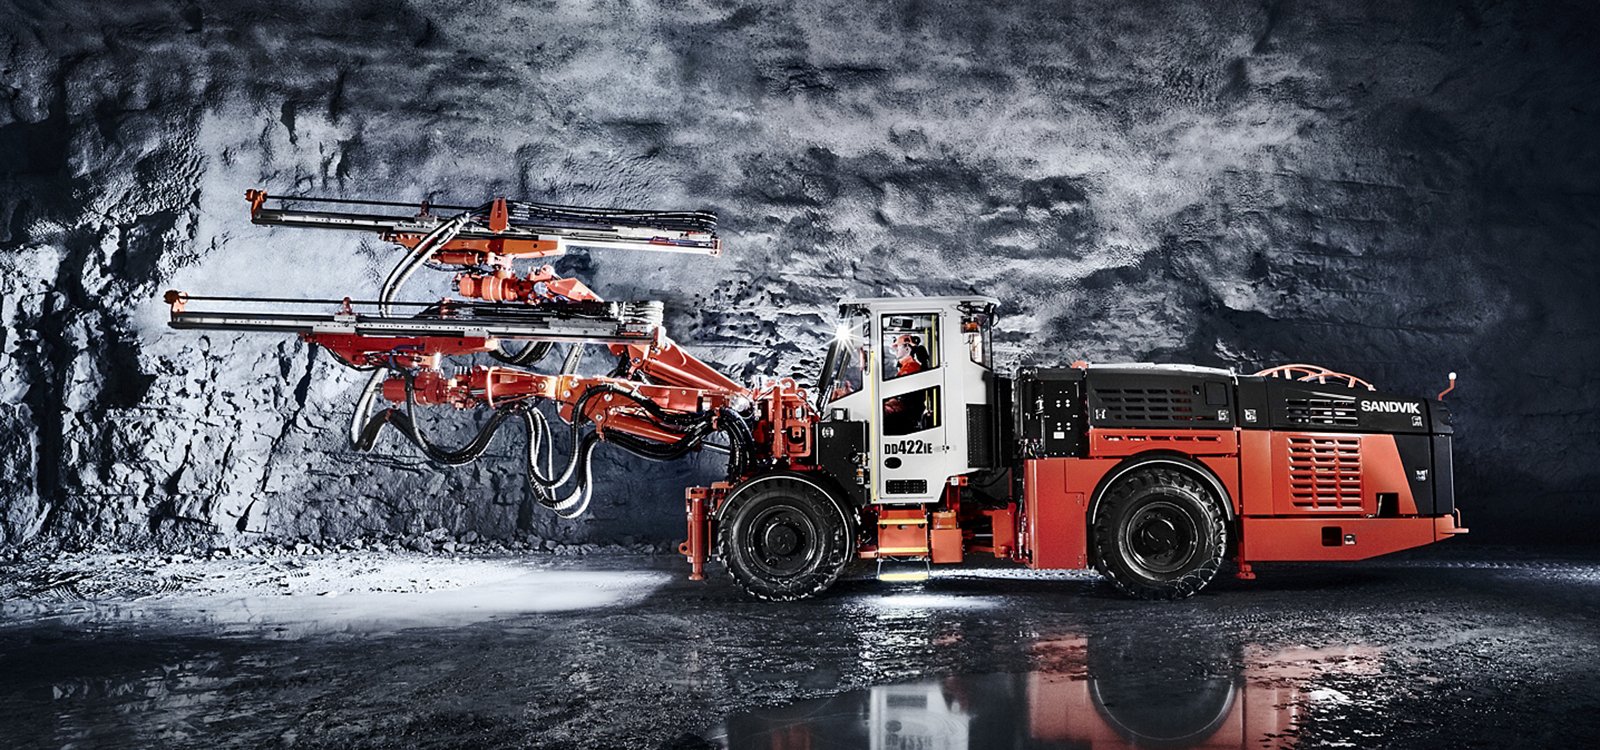 A revolutionary mining jumbo, Sandvik DD422iE offers safe and efficient drift development with zero underground emissions.